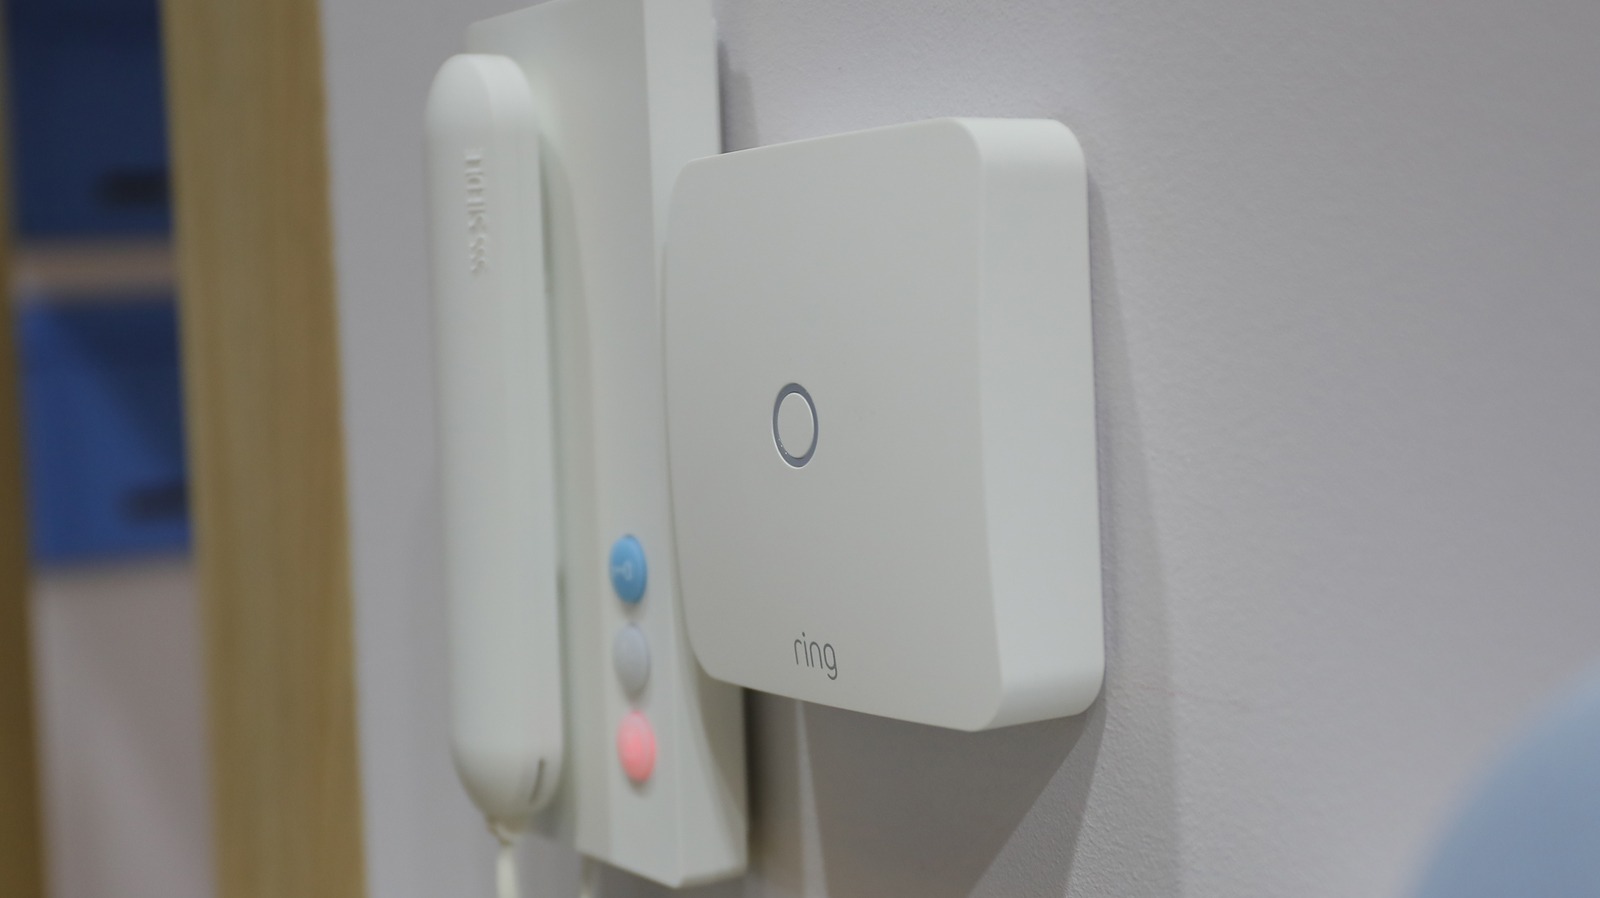 Ring Intercom Gives Your Door Buzzer A Smart Home Upgrade